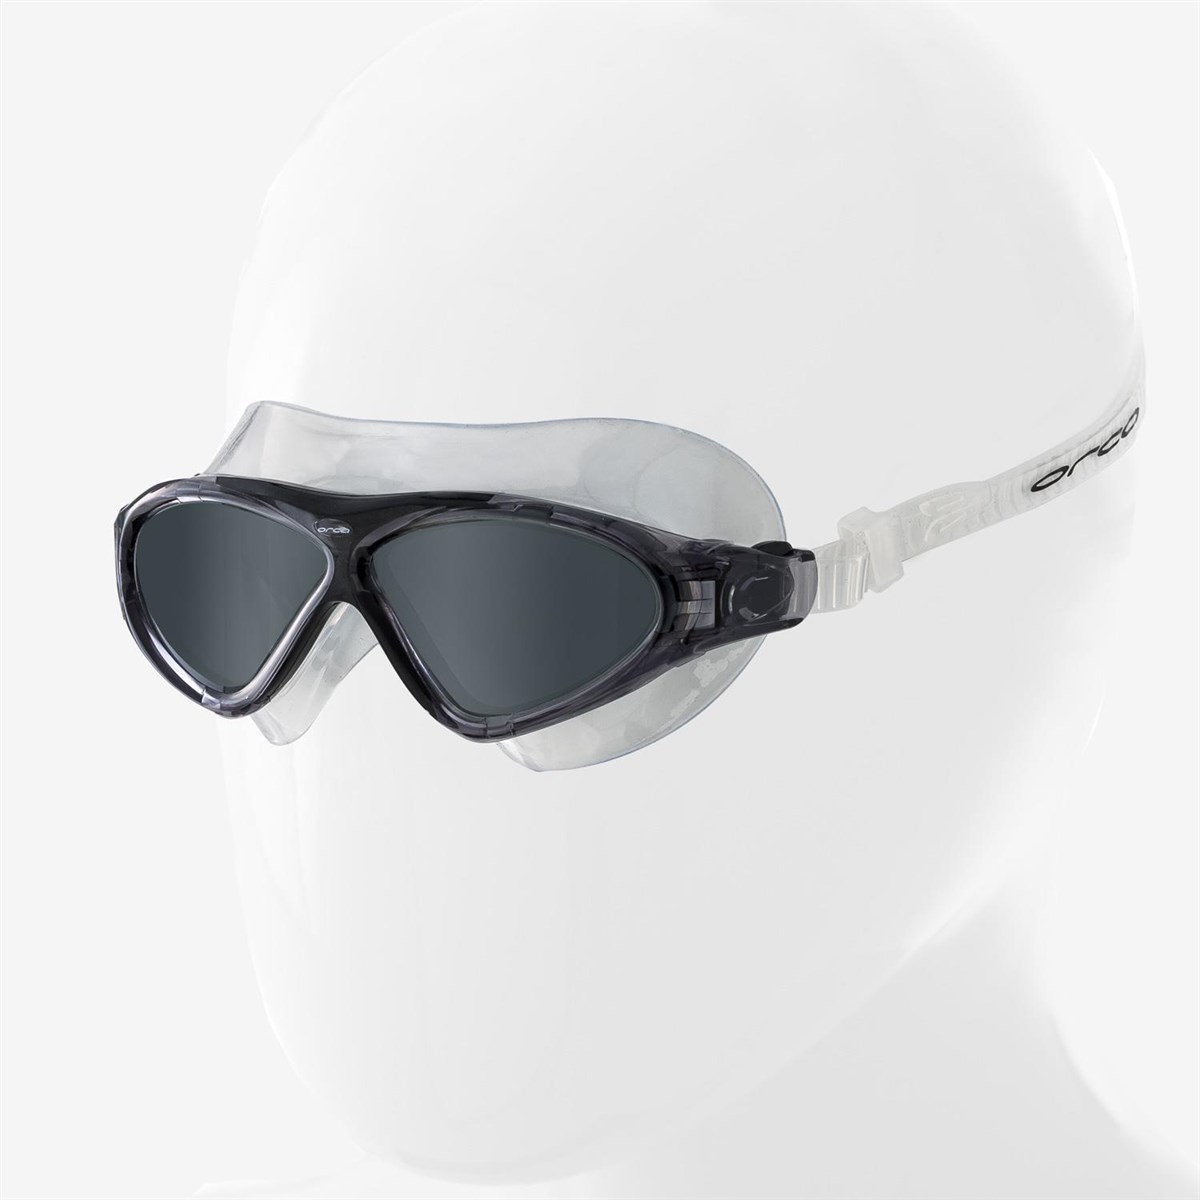 Orca Goggle Mask product image